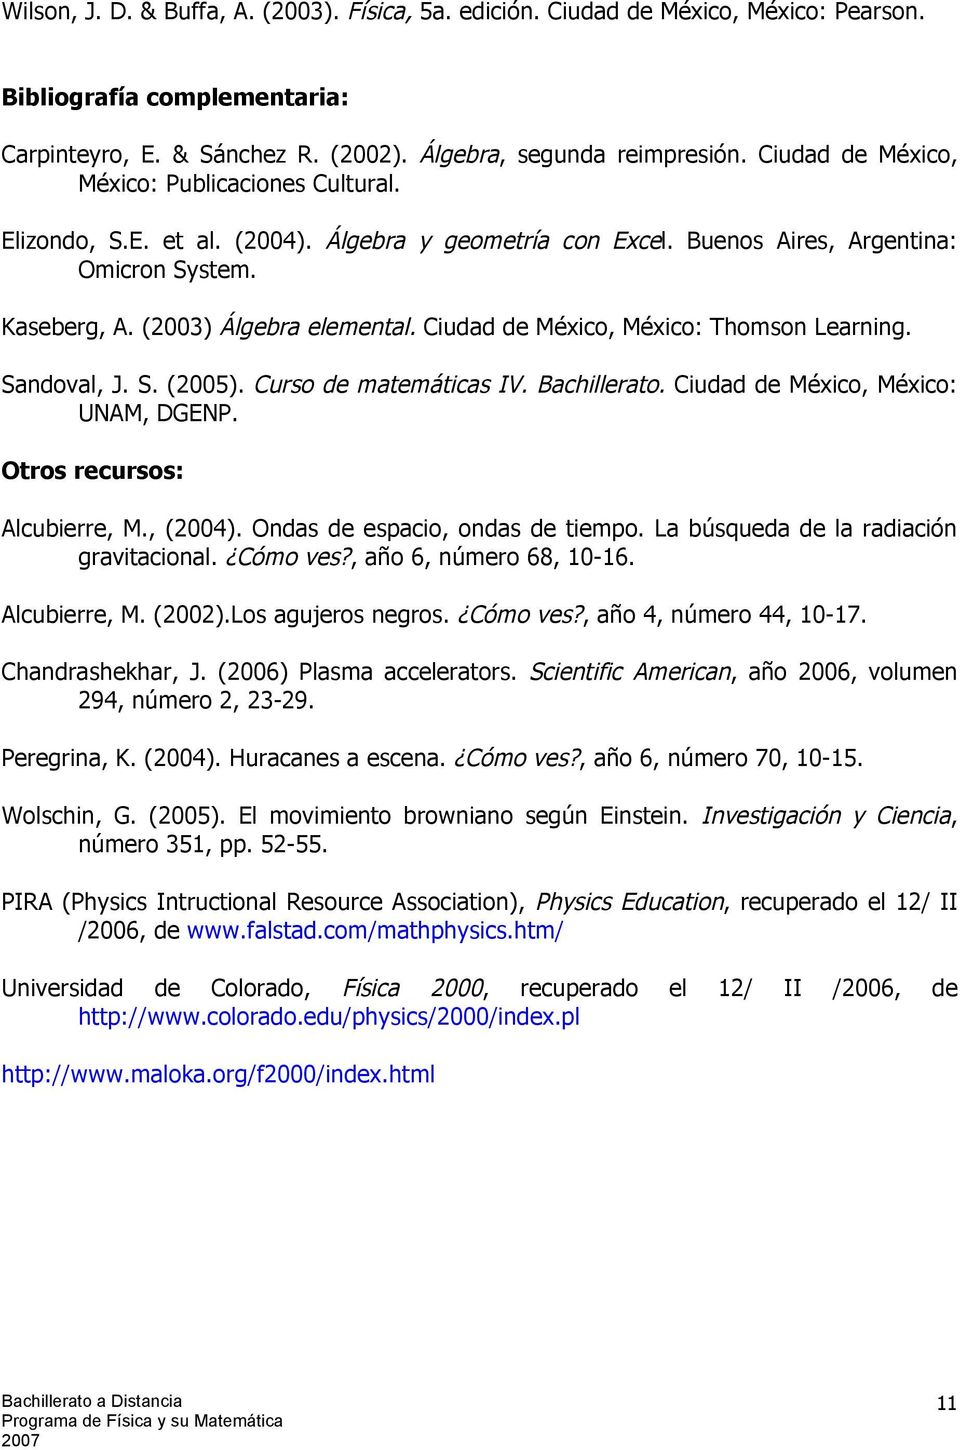 Ciudad de México, México: Thomson Learning. Sandoval, J. S. (2005). Curso de matemáticas IV. Bachillerato. Ciudad de México, México: UNAM, DGENP. Otros recursos: Alcubierre, M., (2004).